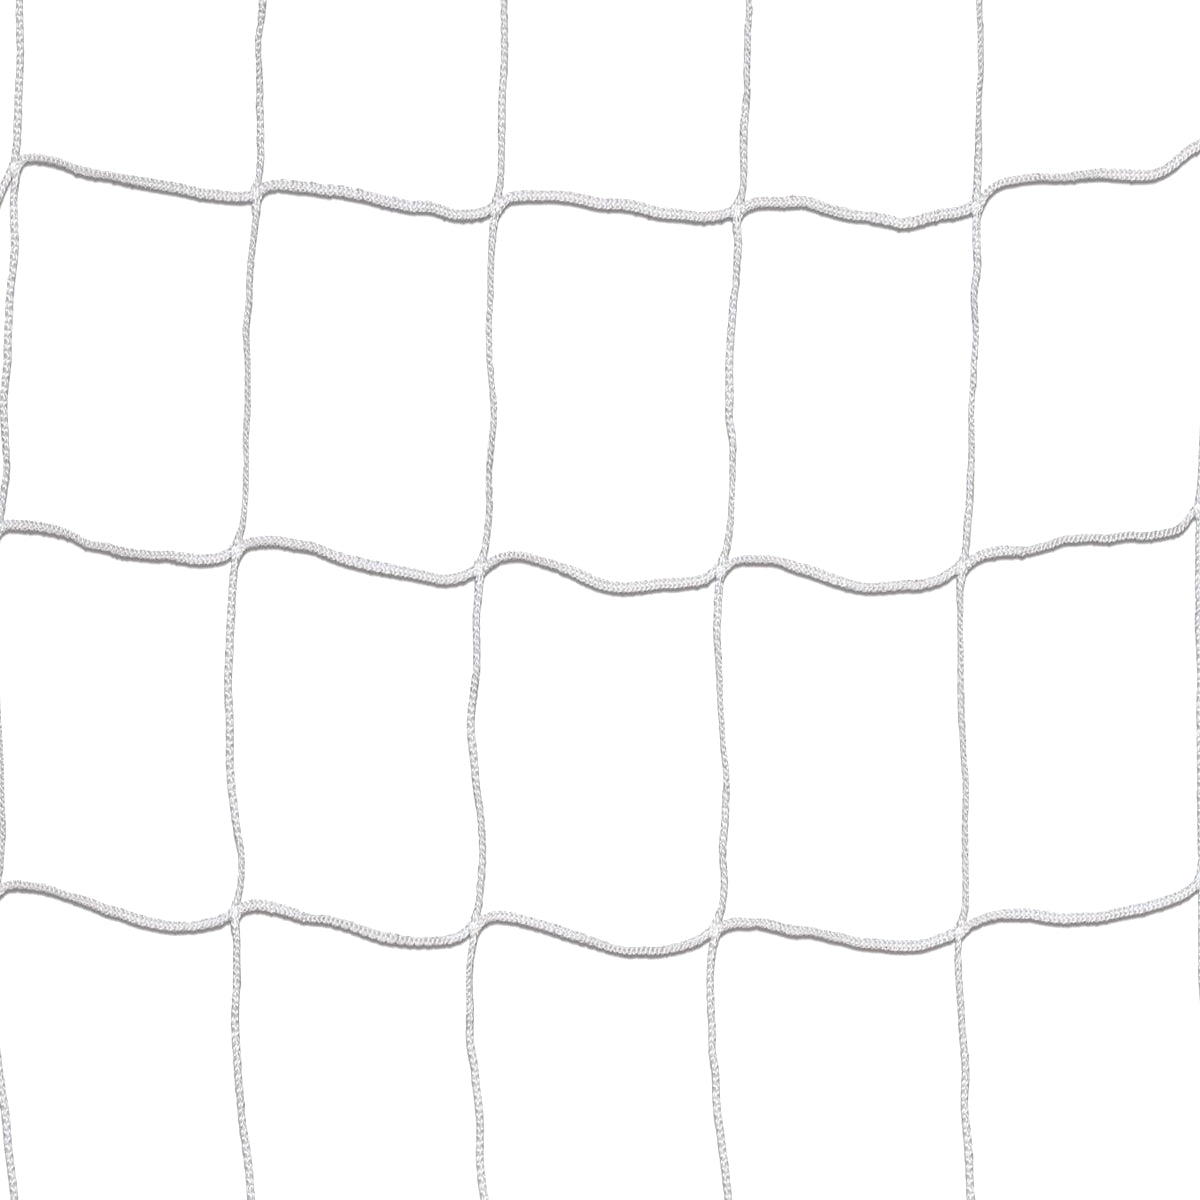 Kwikgoal 2mm Solid Braid Knotless Net | 3B7224 Nets Kwikgoal 